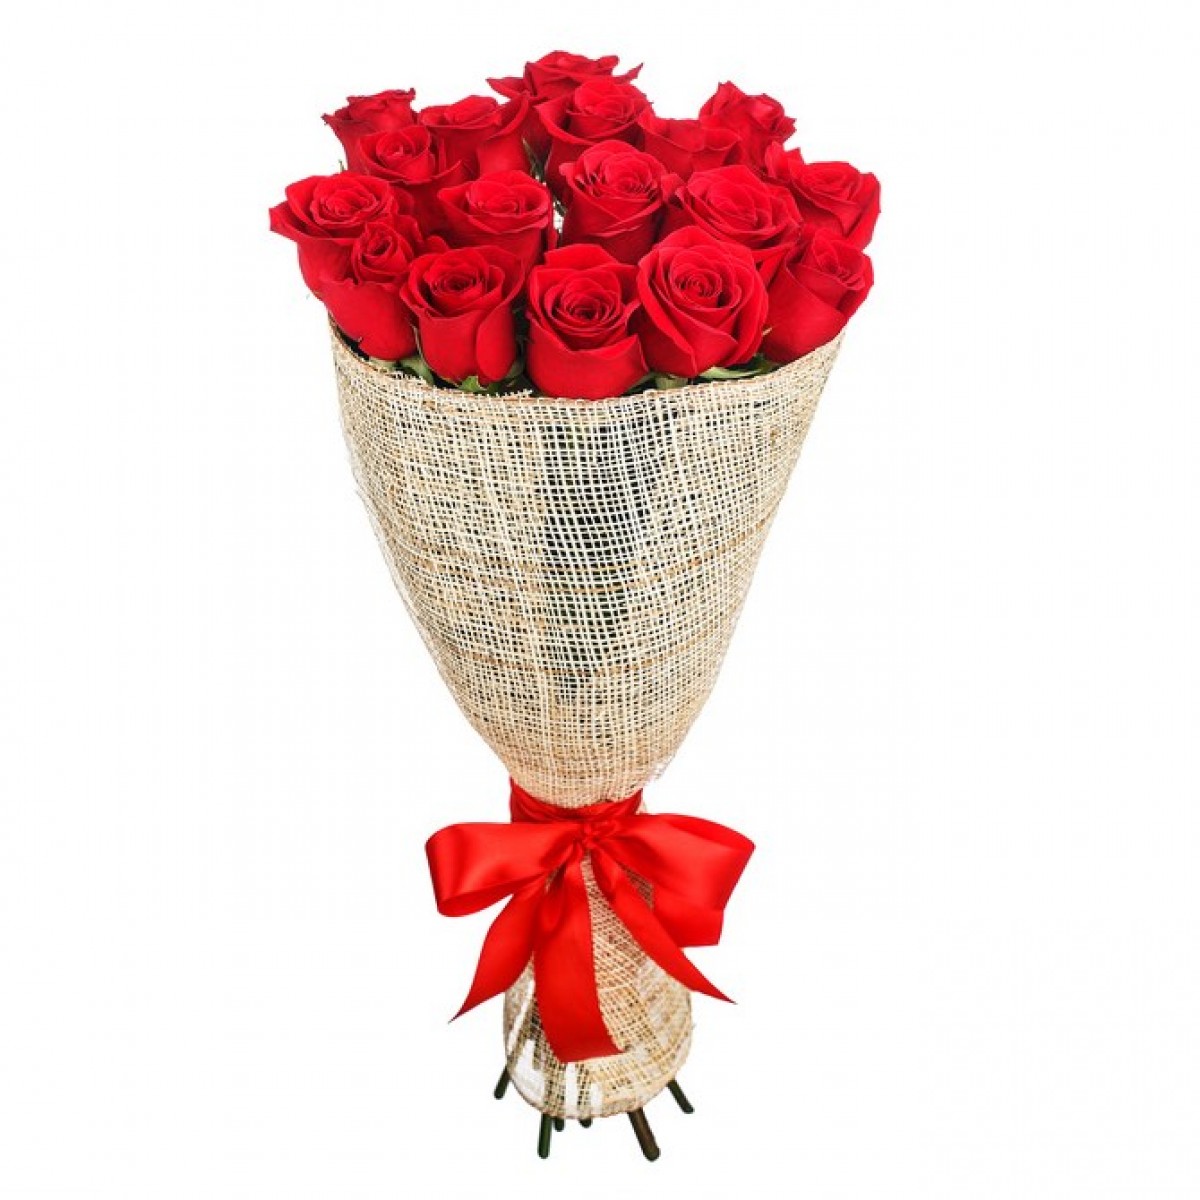 Red Roses Bouquet – Send Flowers to Amman Jordan - Online Gift Shop in ...